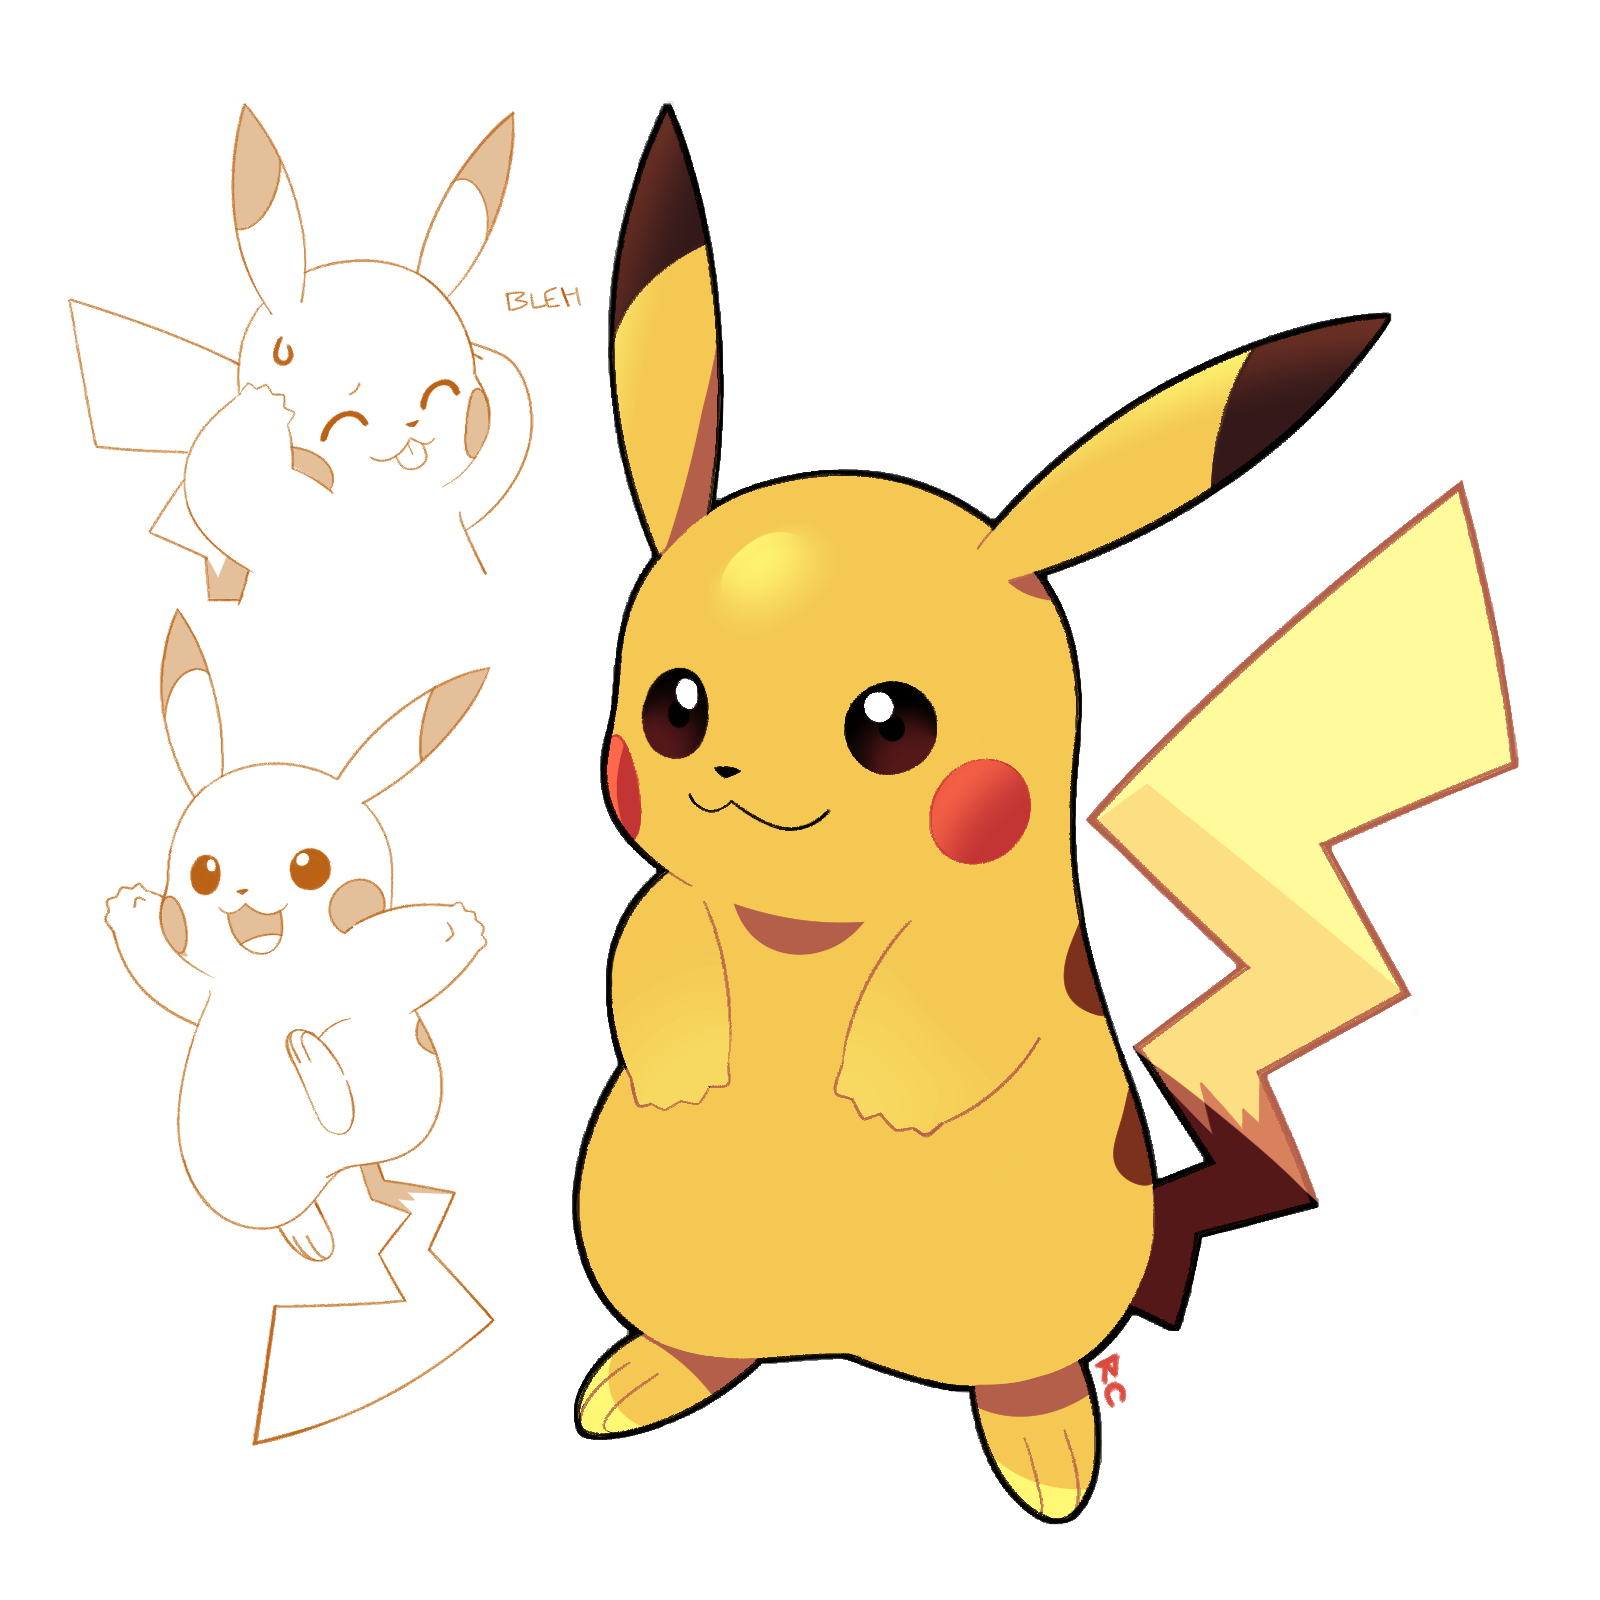 mimikyu (pokemon) drawn by artsy-rc